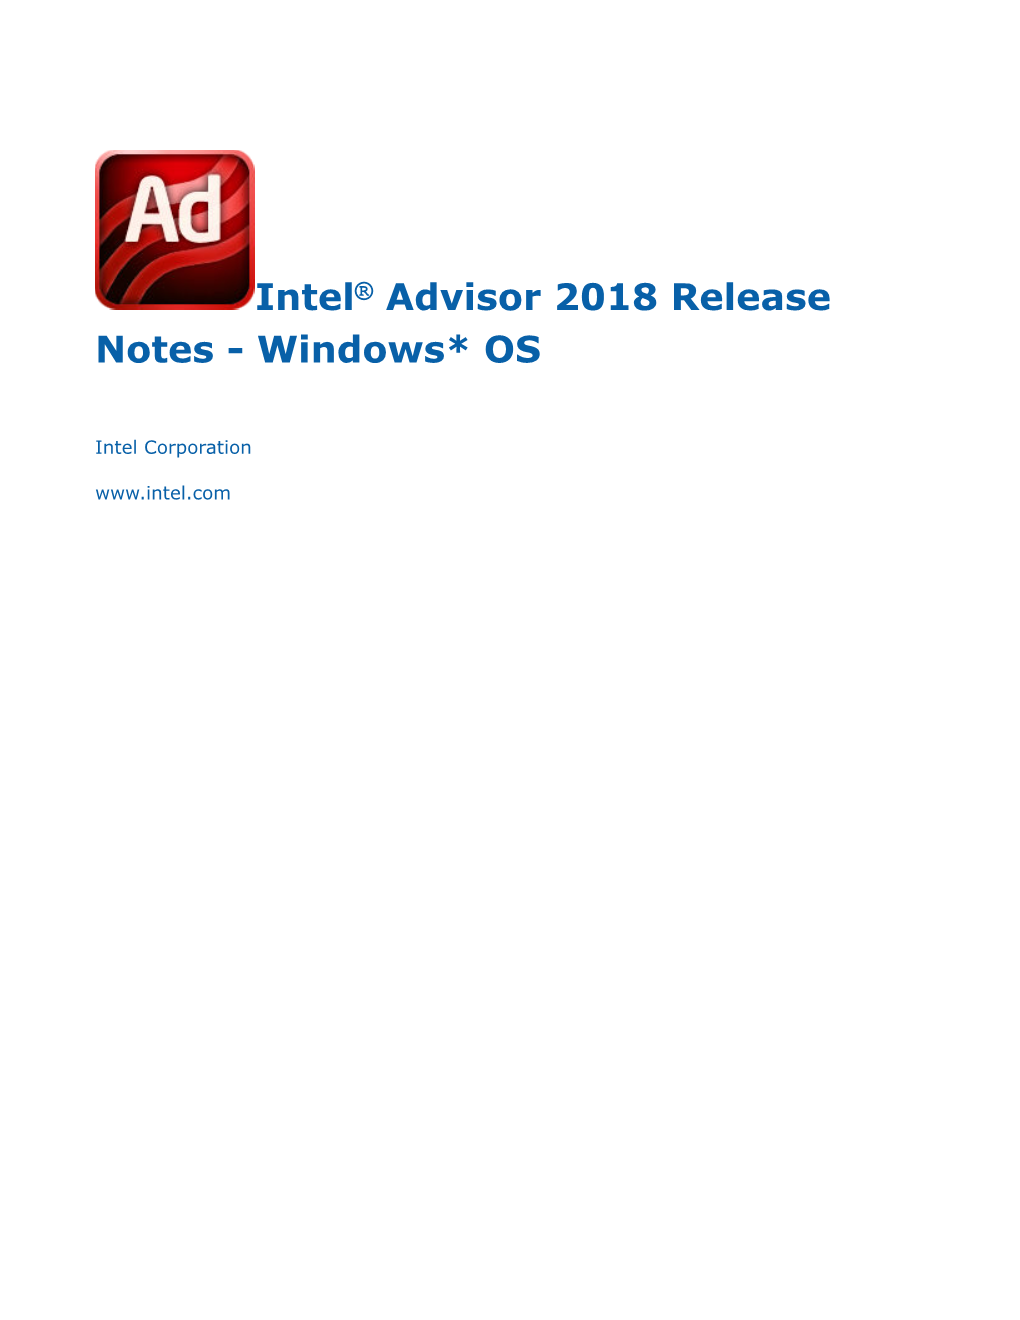 Intel® Advisor 2018 Release Notes - Windows* OS